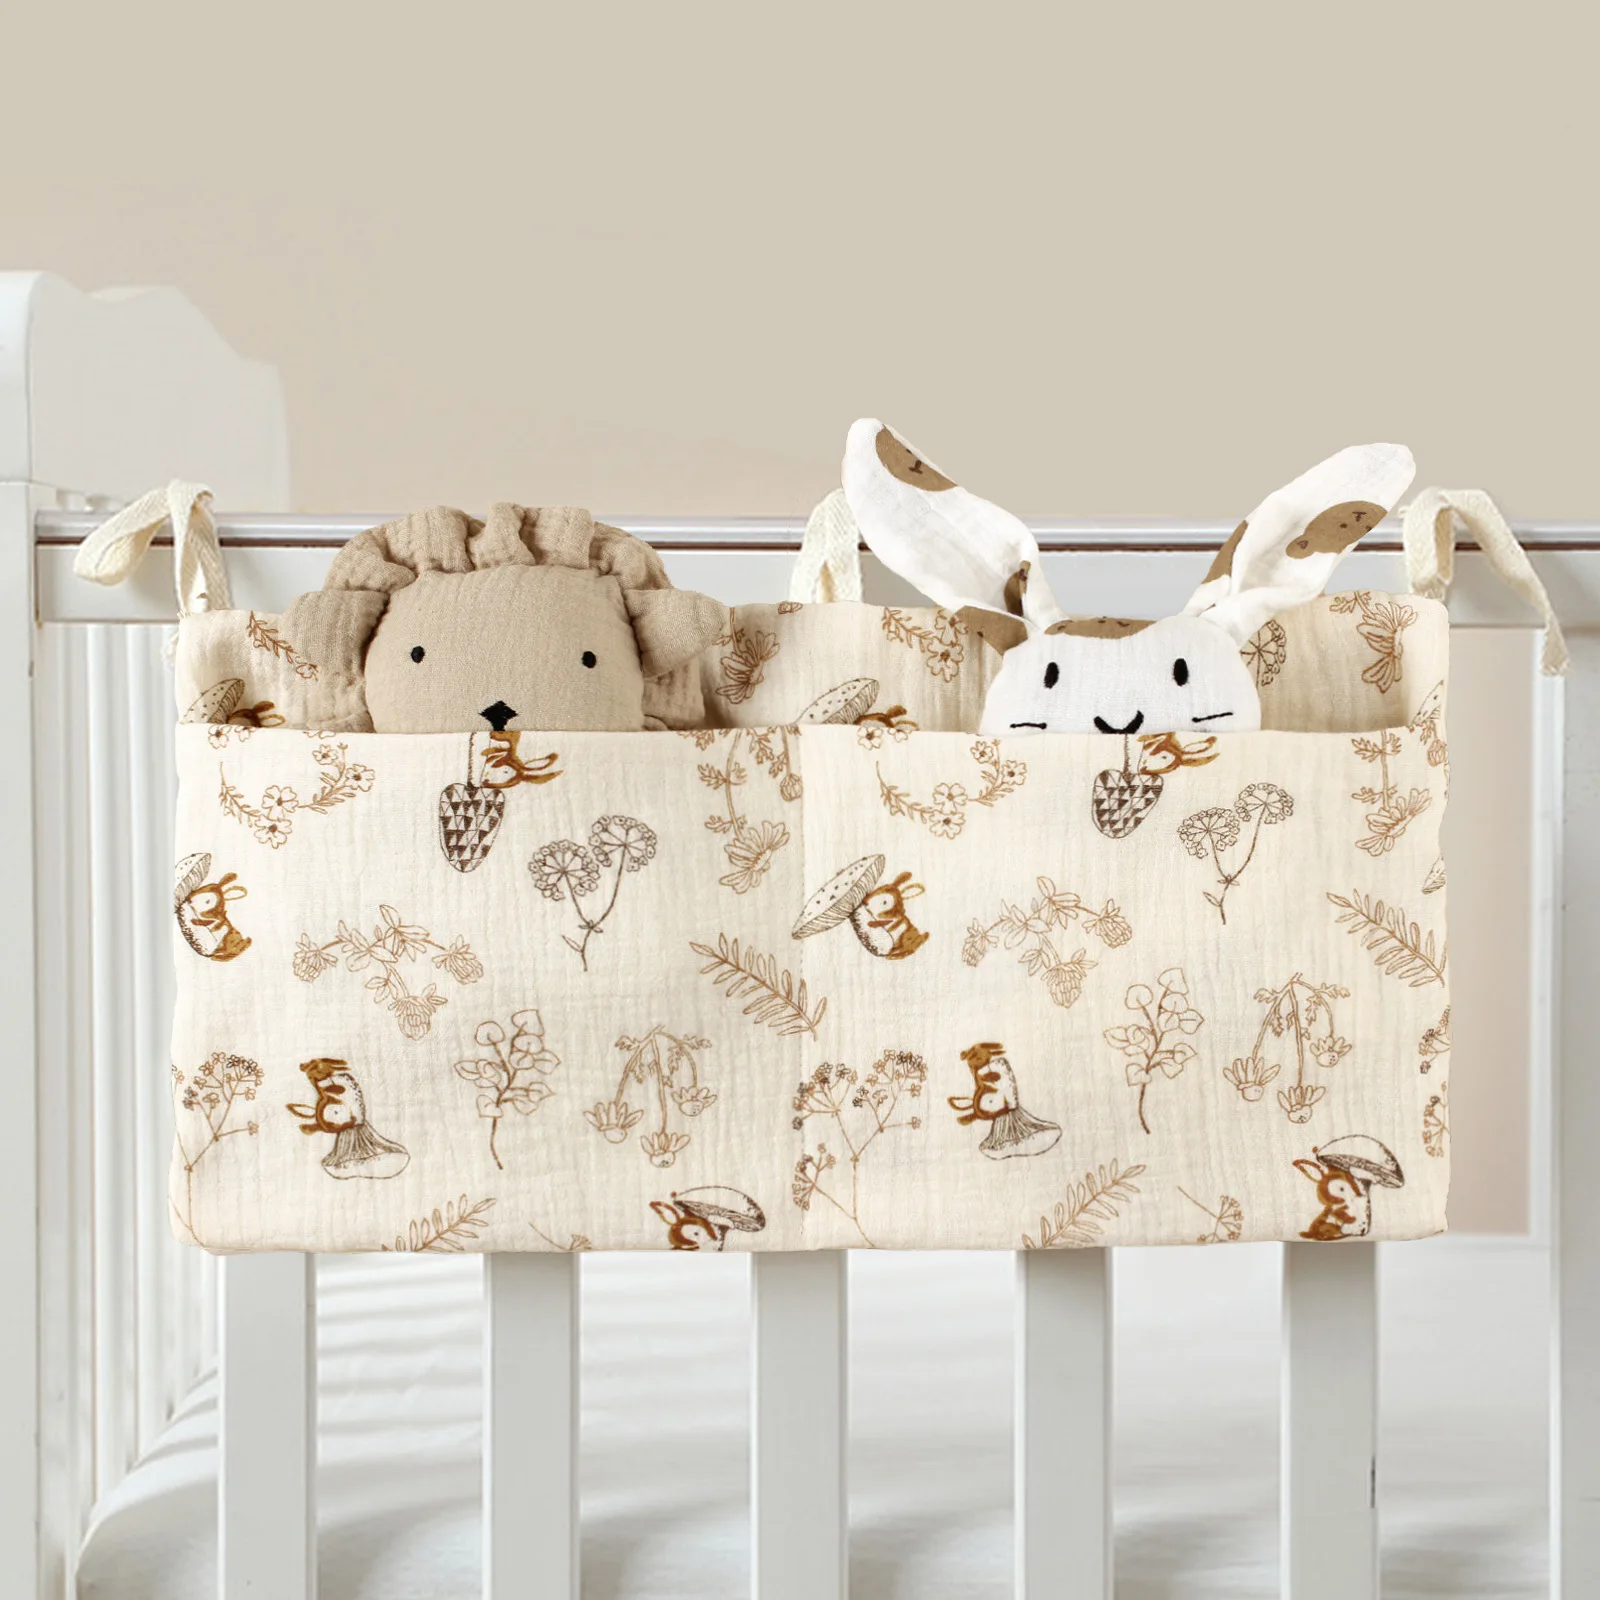 Nest Baby bedside bed hanging storage bag pocket diaper caddy cotton muslin baby nursery crib organizer